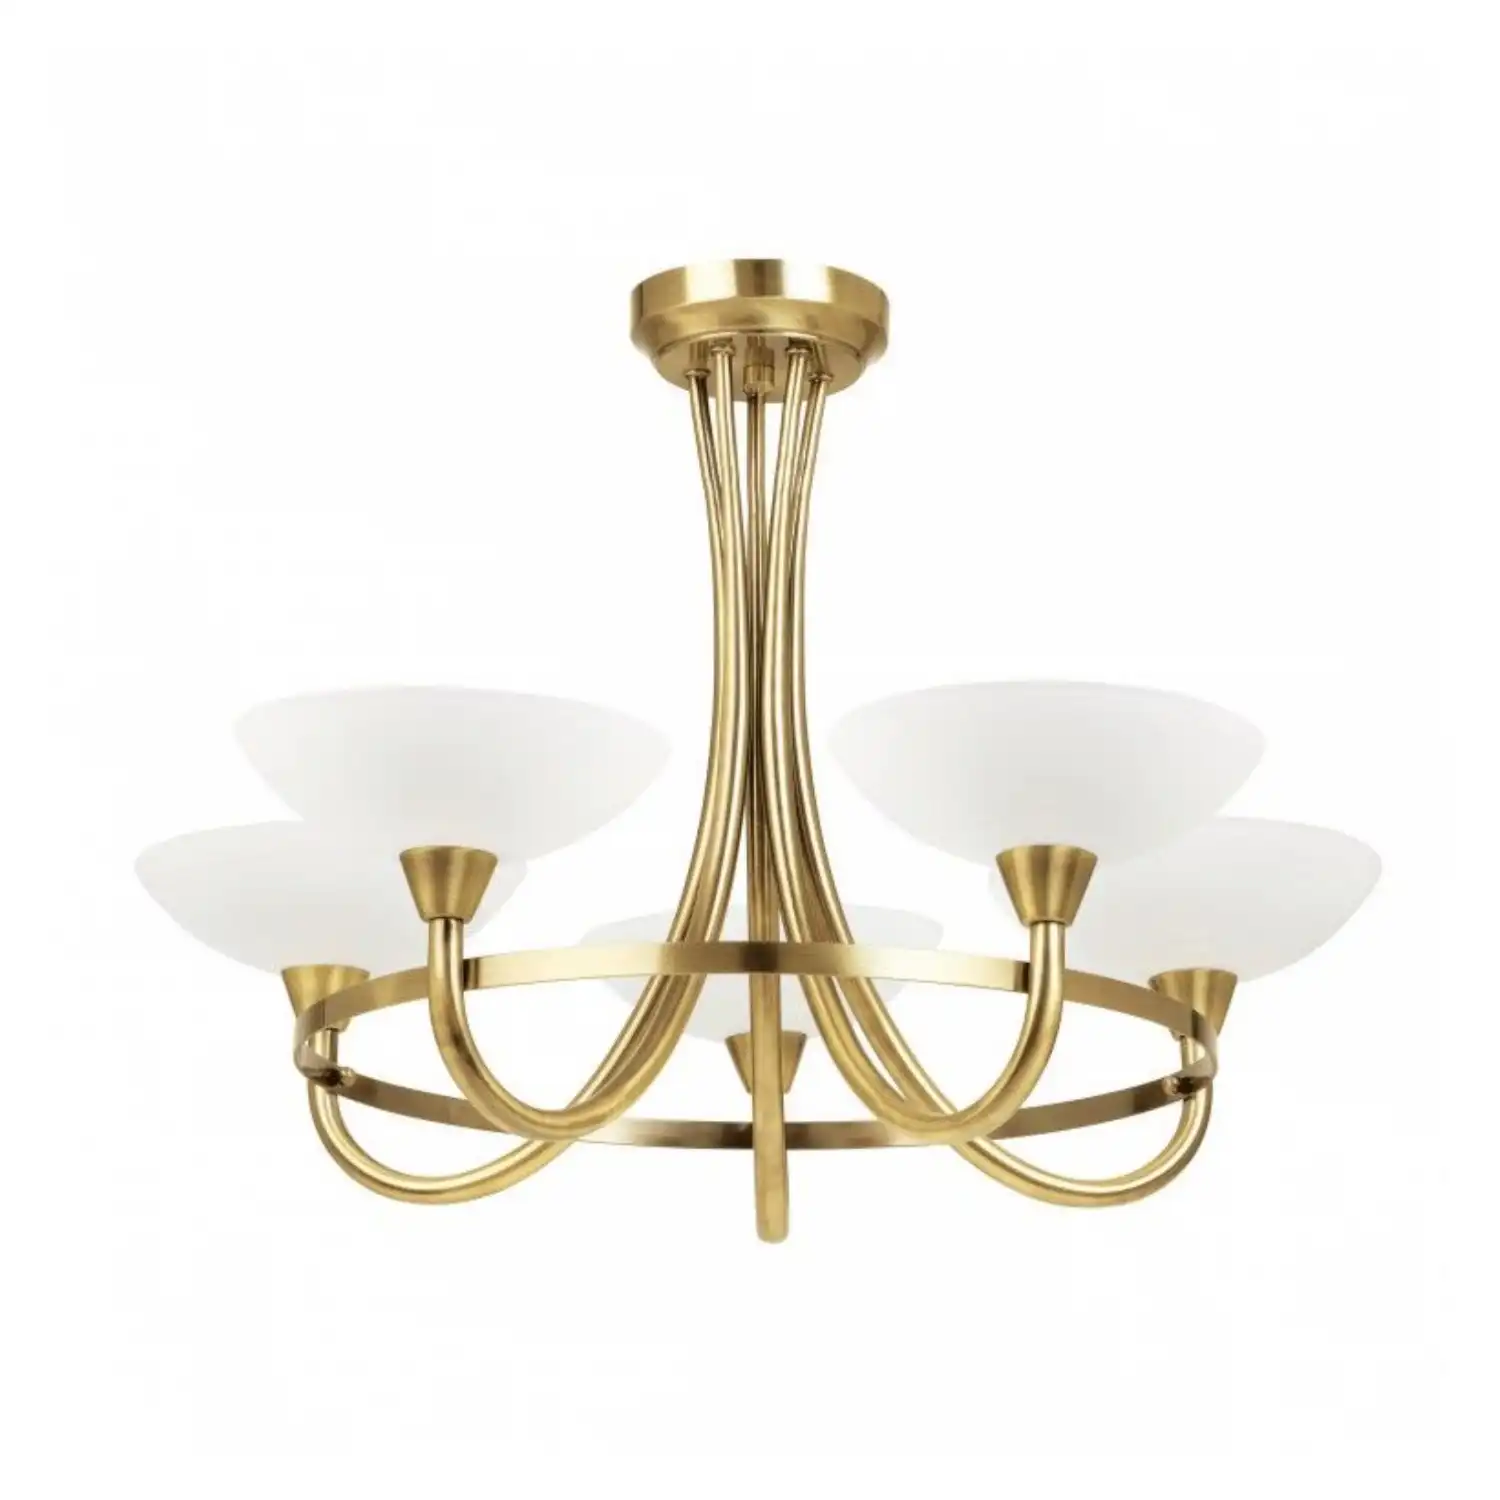 5 Ceiling Lamp Antique Brass